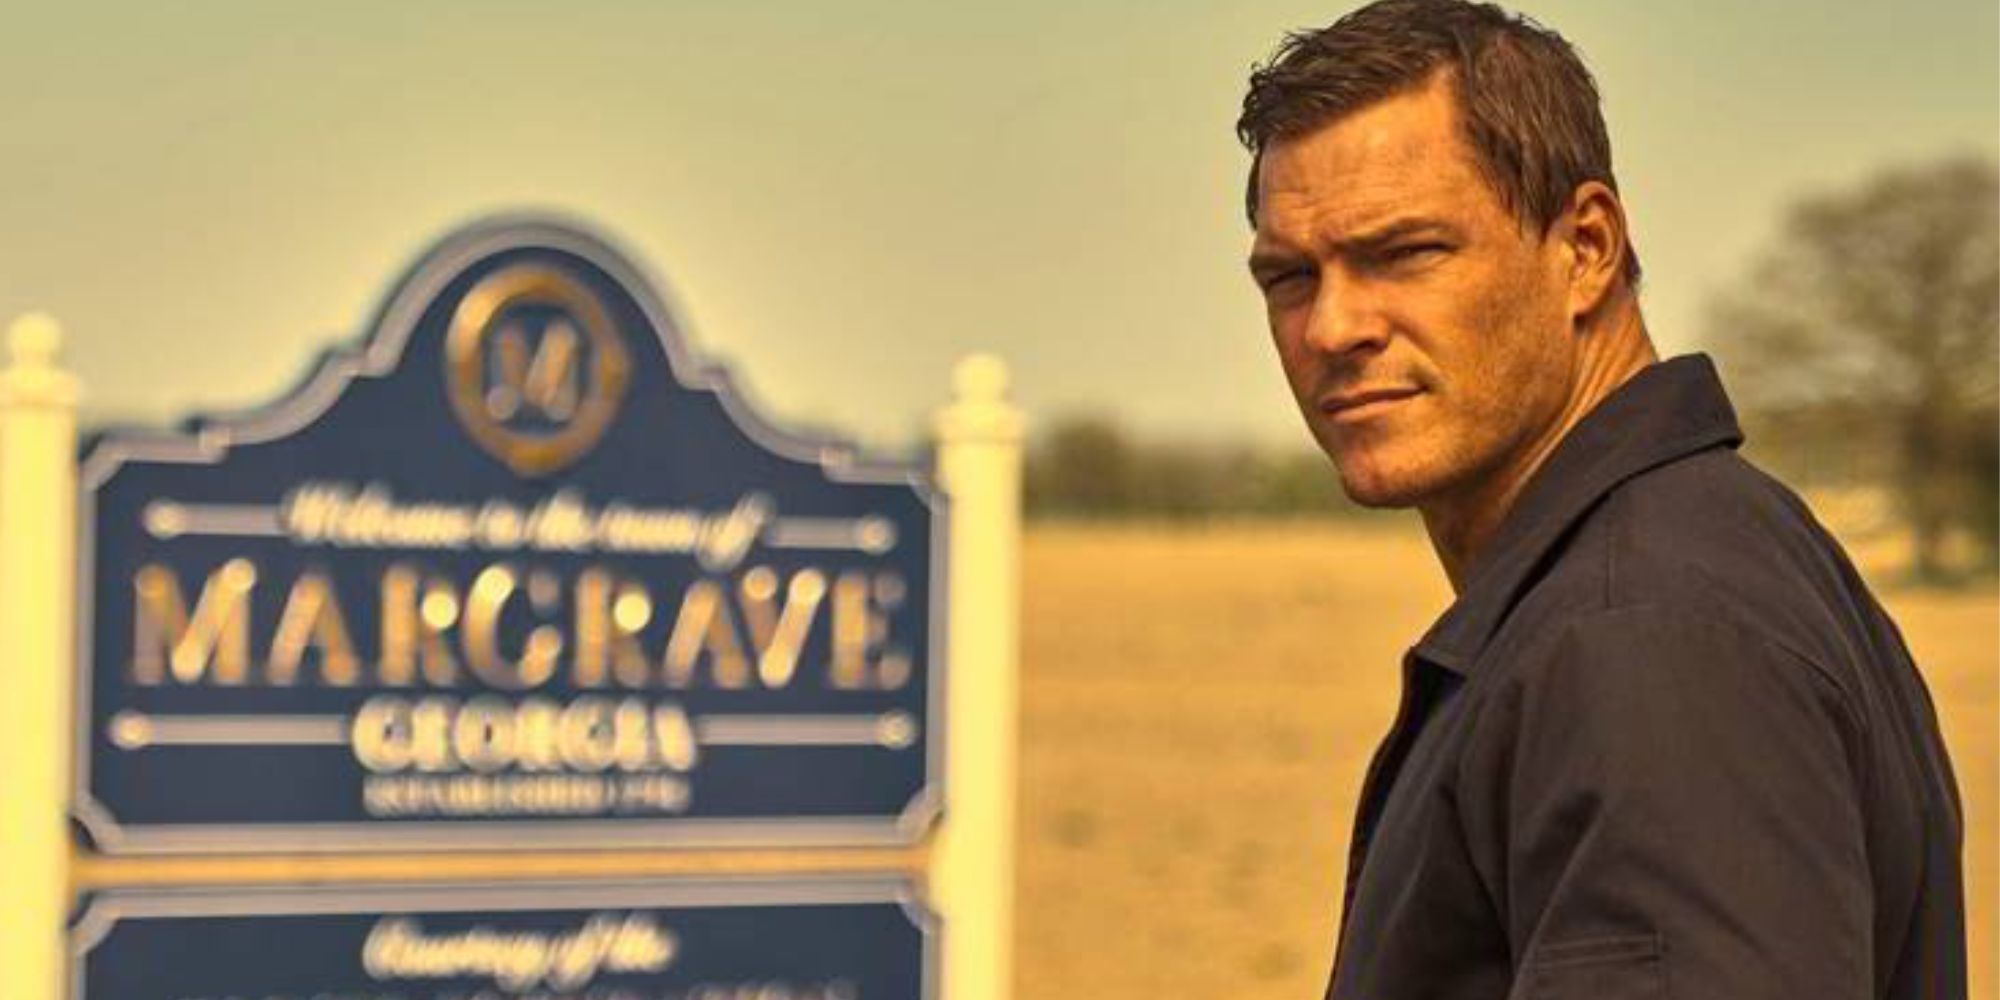 Alan Ritchson as Reacher near the sign for Margrave, Georgia in Reacher season 1